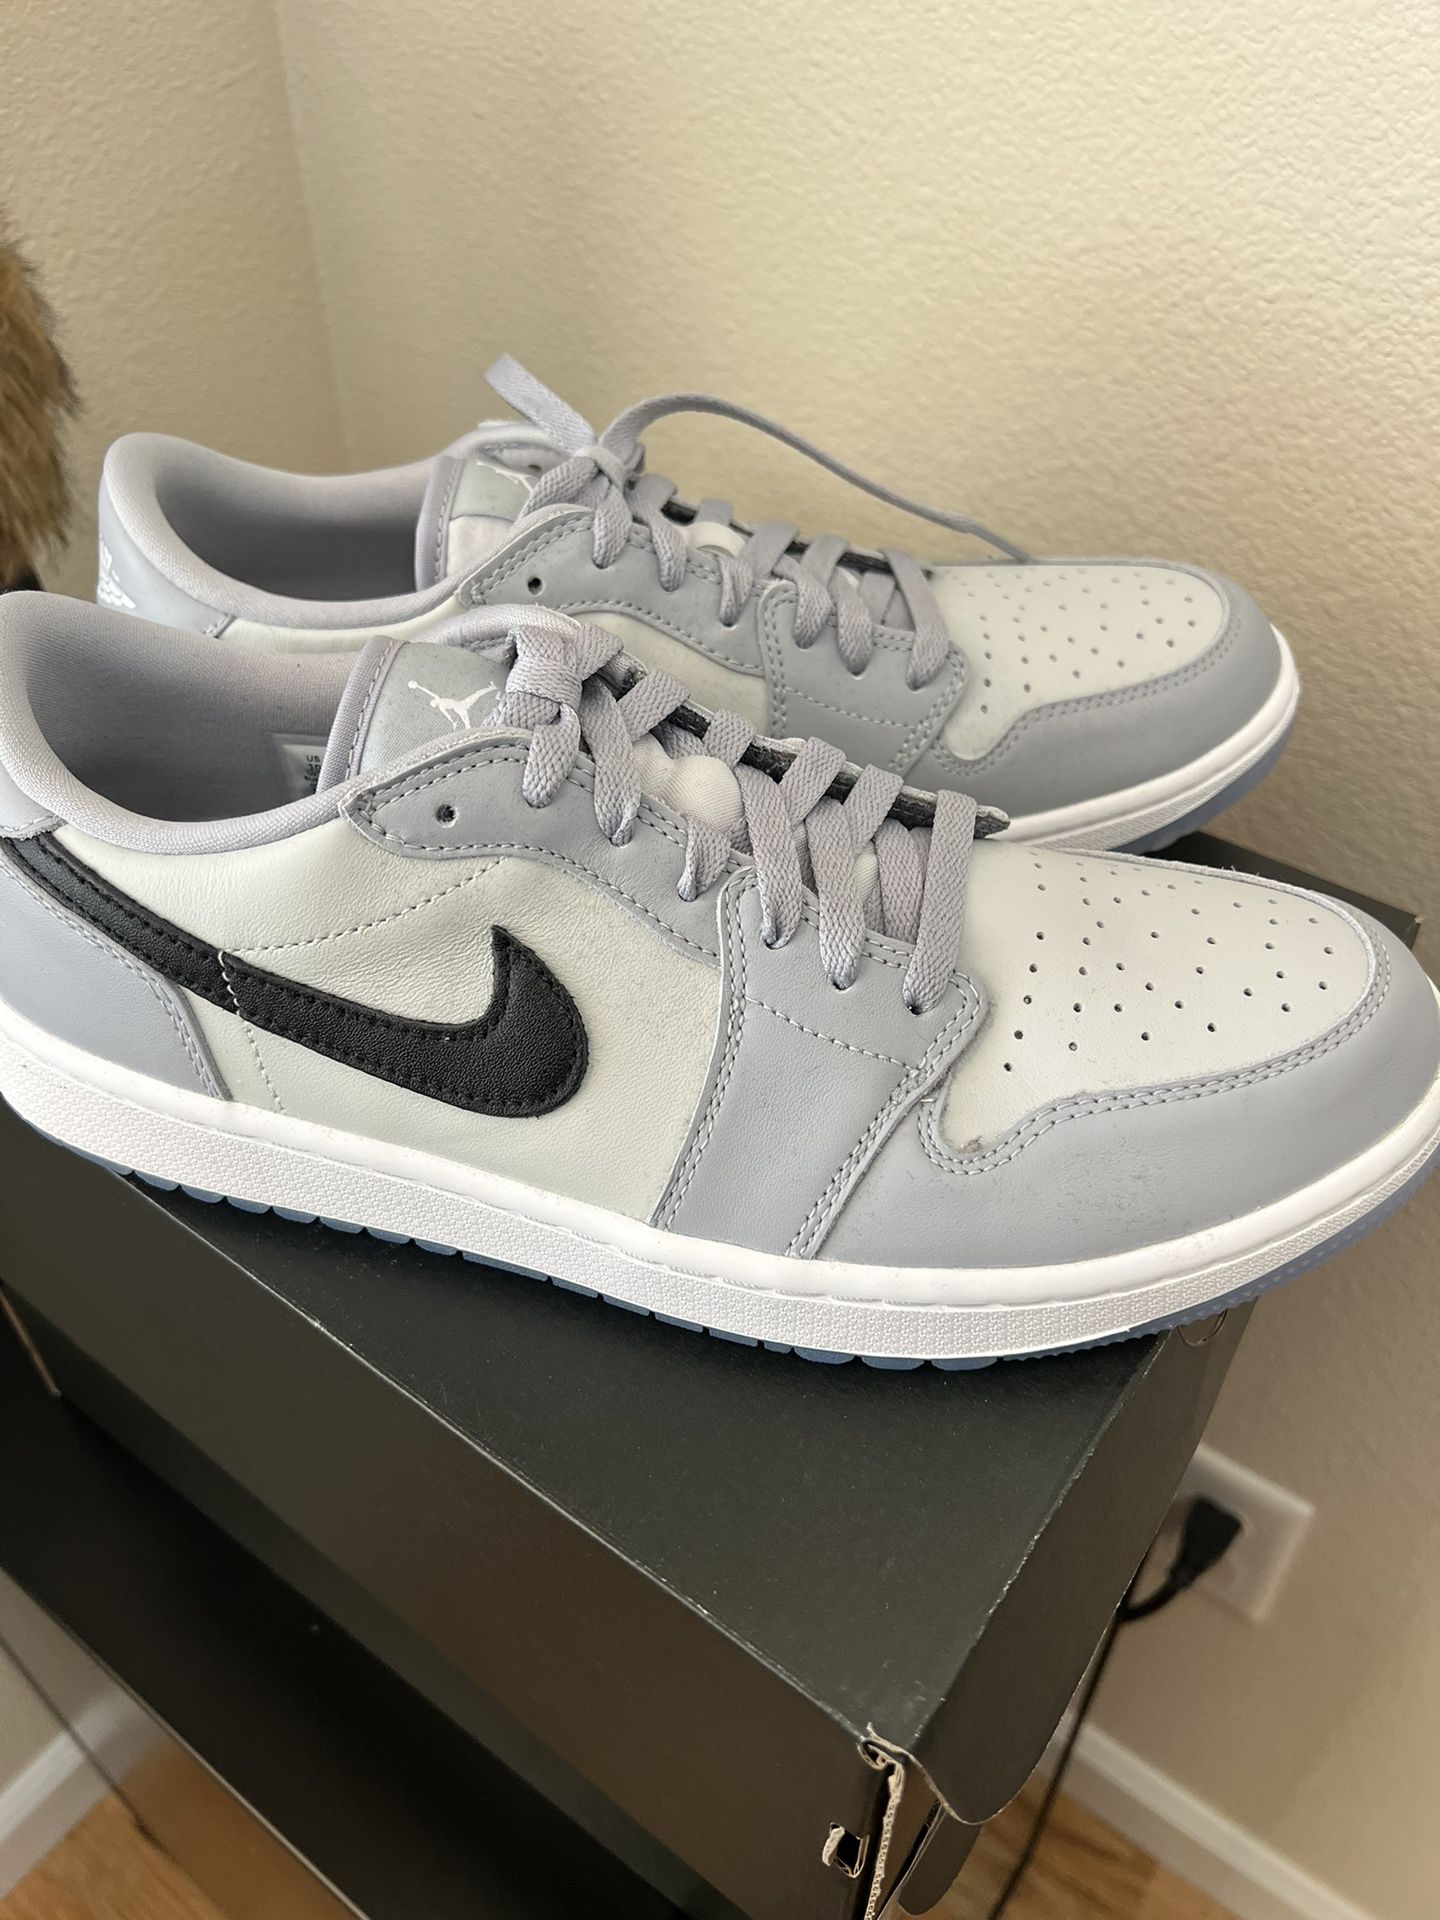 Jordan and Nike Golf Shoes 